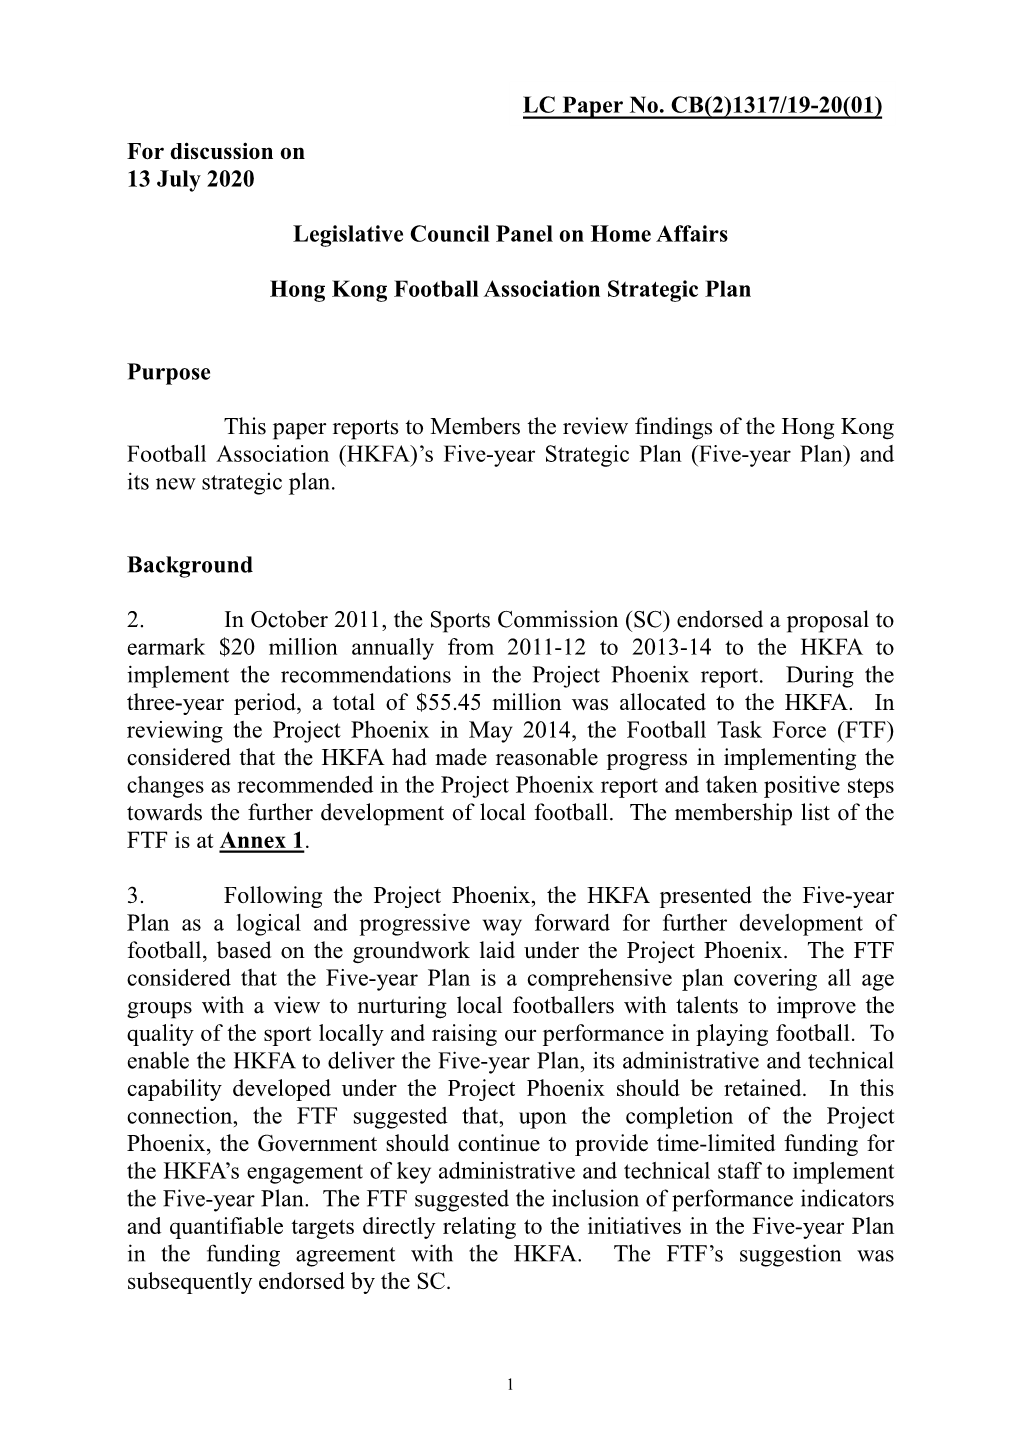 Administration's Paper on Hong Kong Football Association Strategic Plan